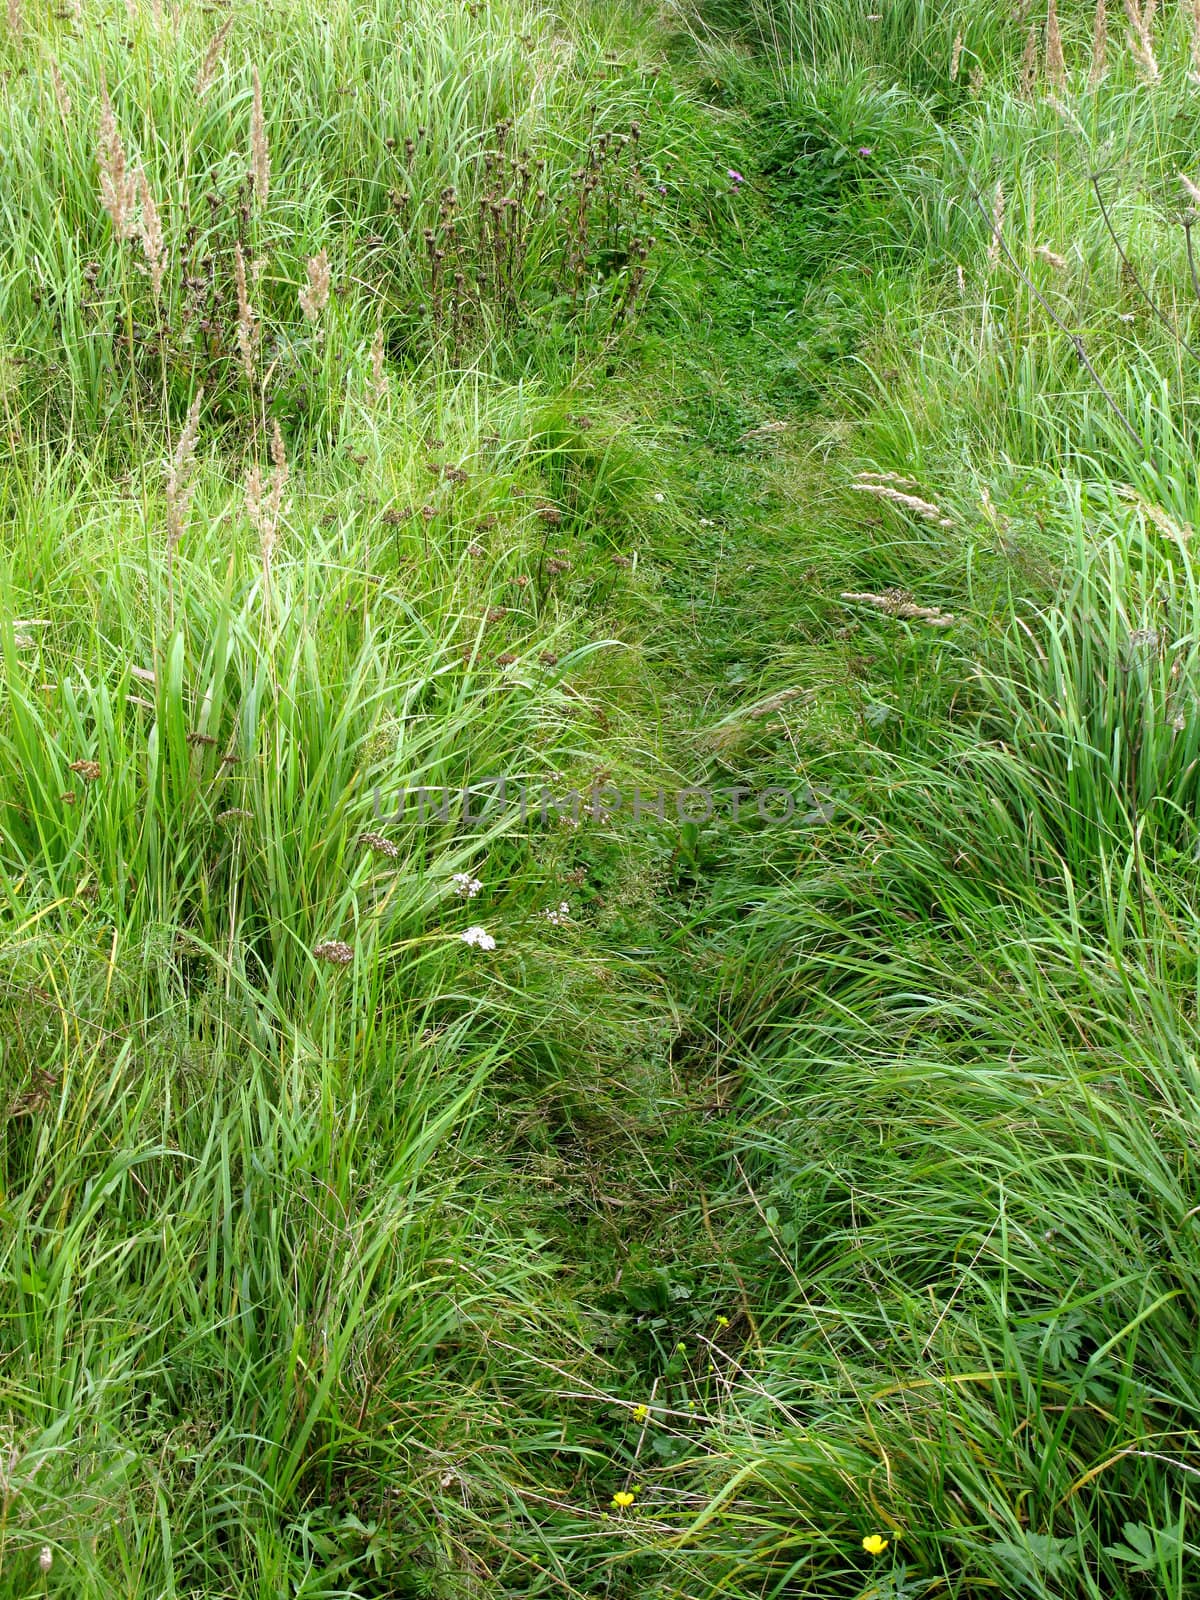 Narrow footpath in green grass by wander